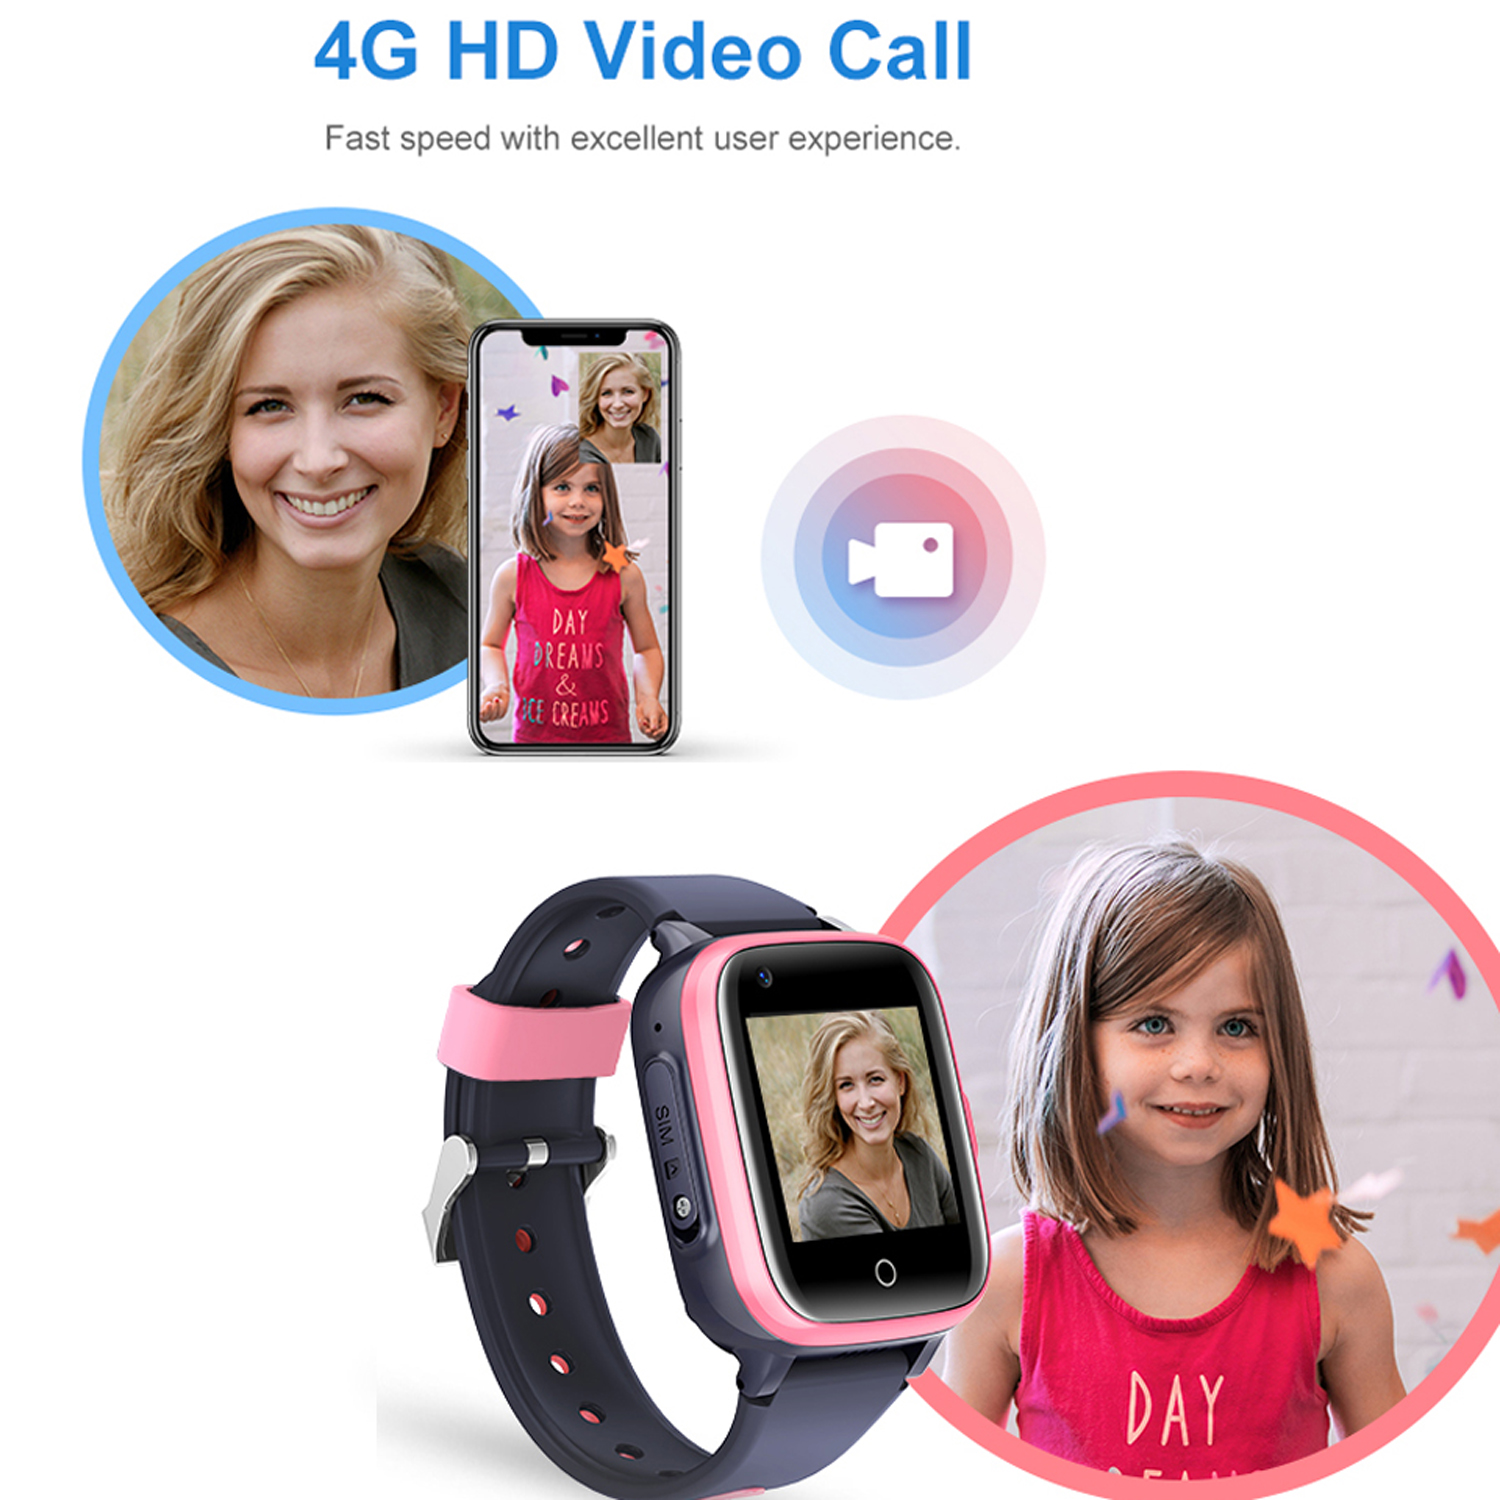 2022 New 4G WiFi Tracking Video Call IP67 Waterproof SOS Call Boy Girl Kids GPS security Smart Watch for Emergency Help D31